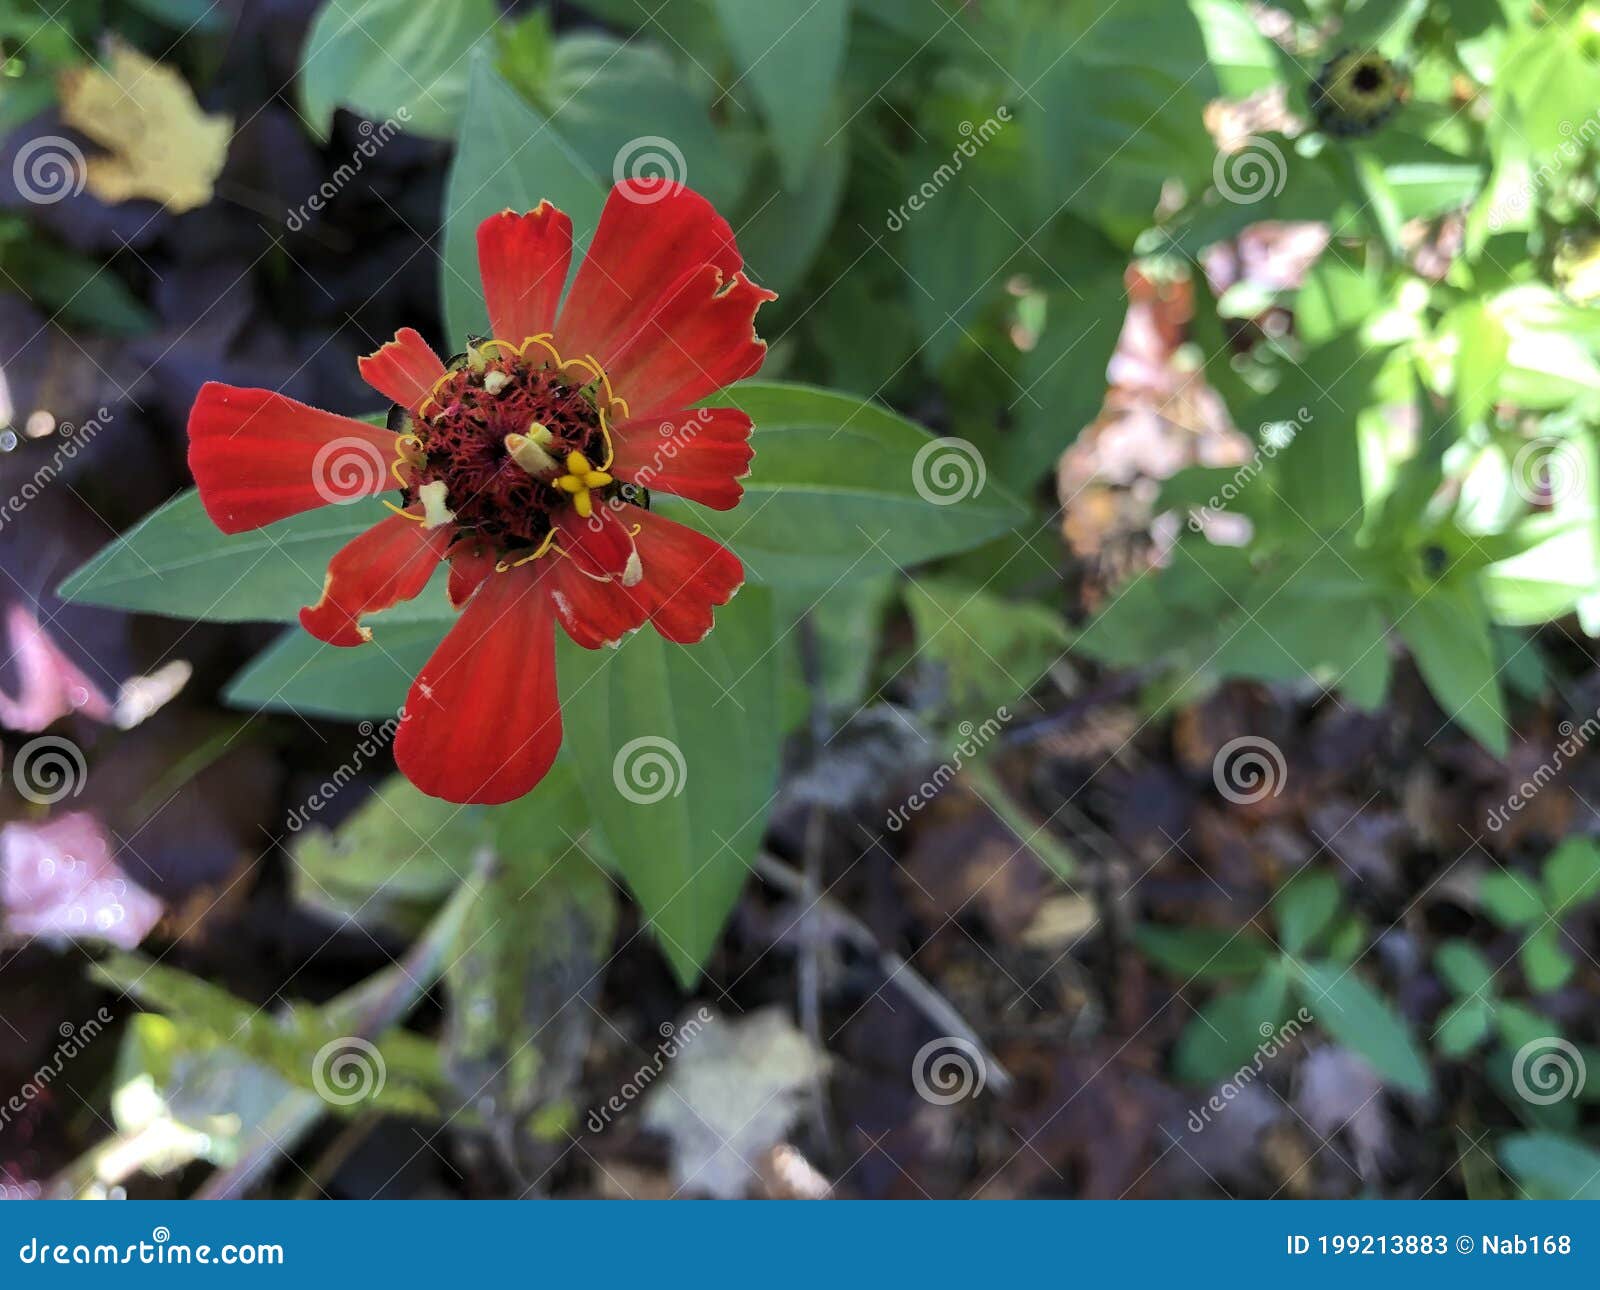 a small red zinnia missing most petals